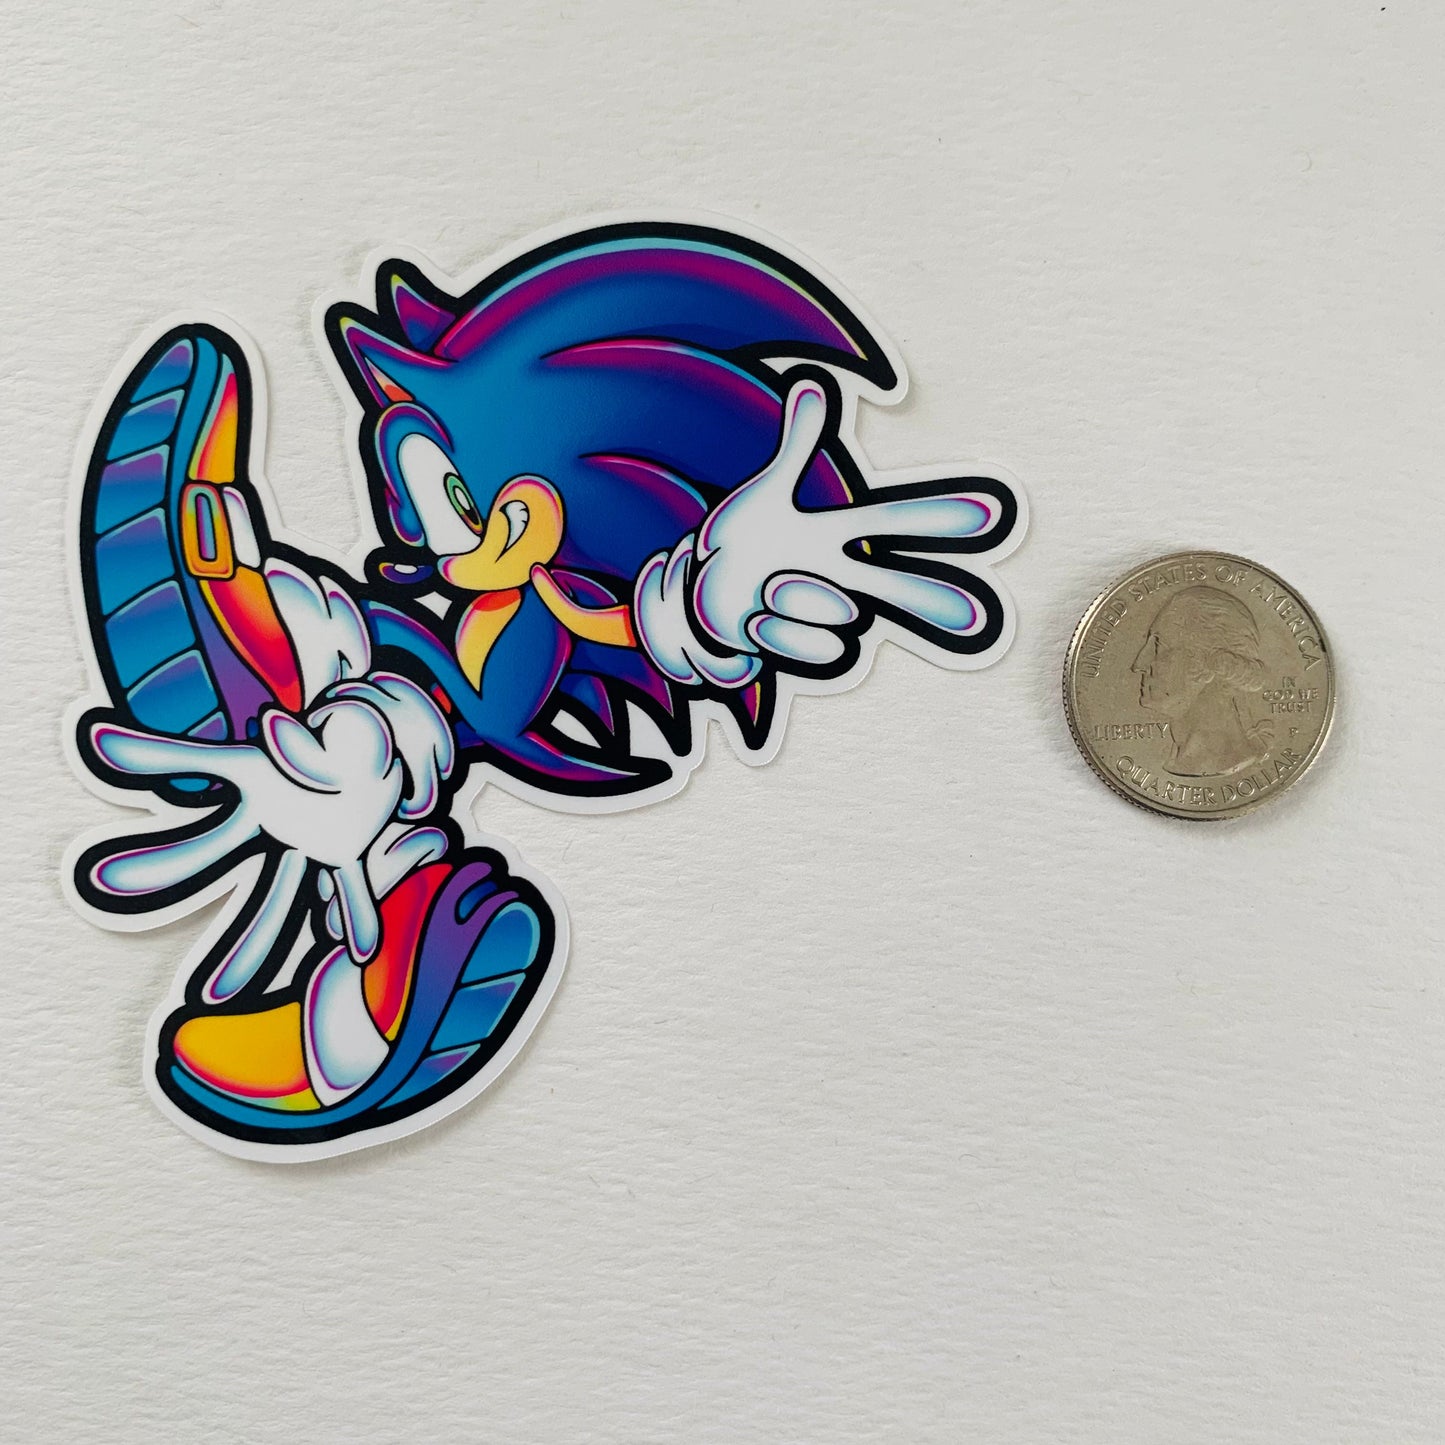 The Blue Blur 3.75" Sonic Sticker